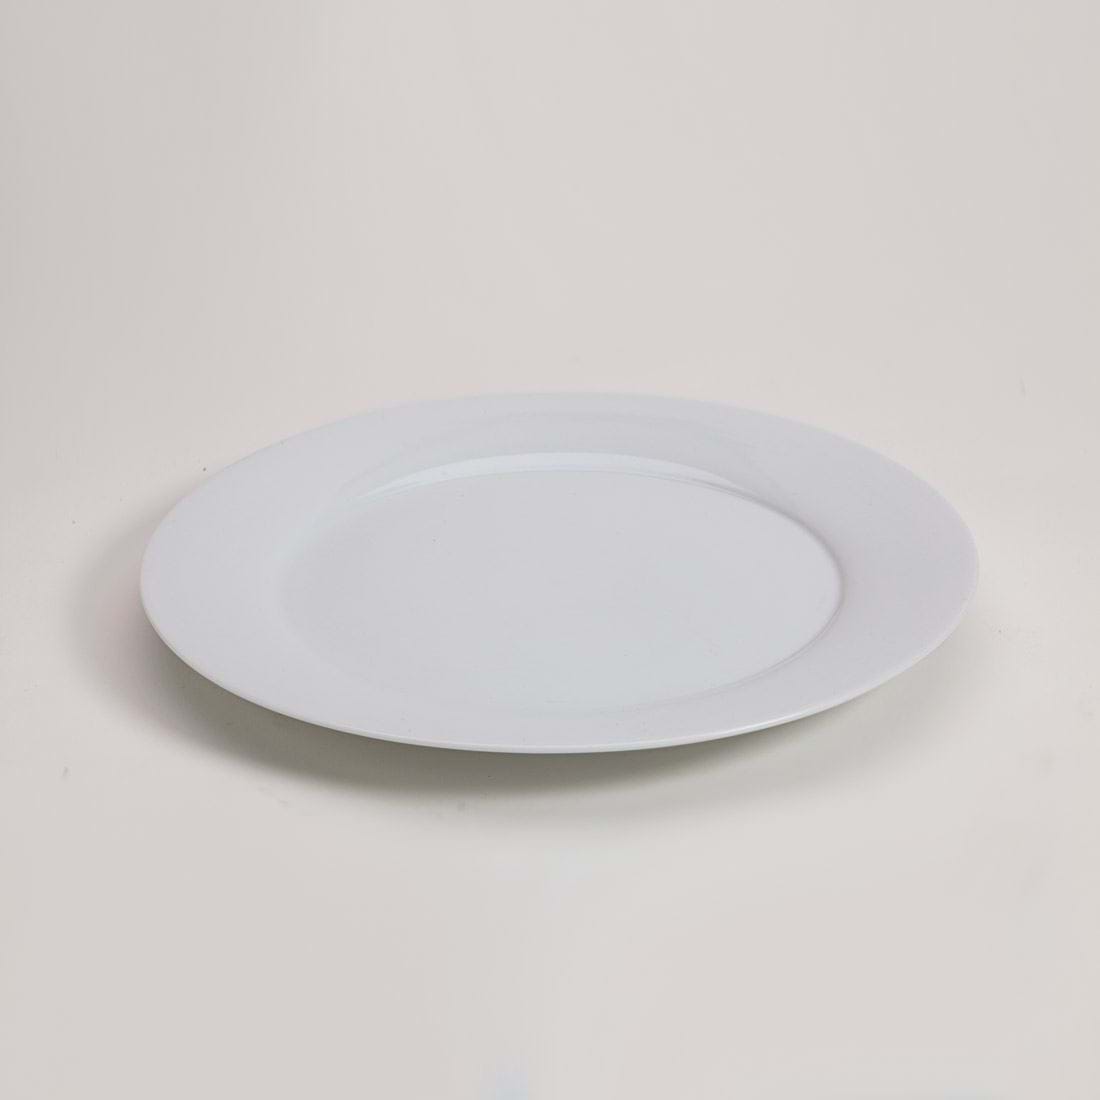 Pearl white 10.25 dinner plate